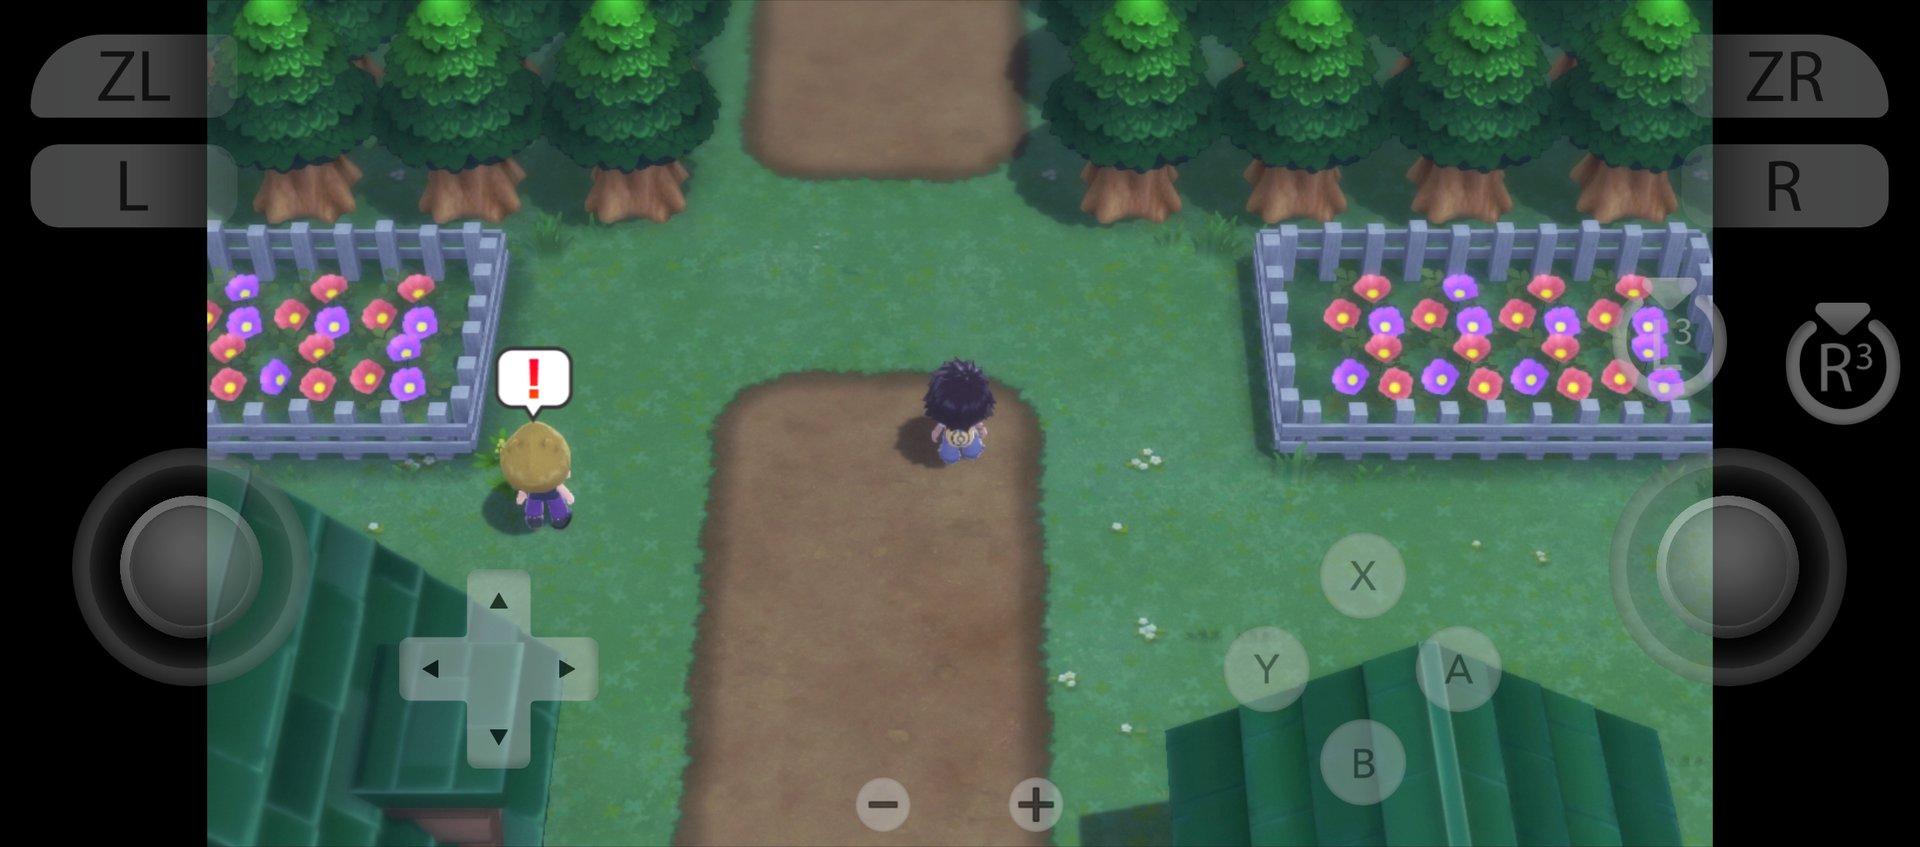 How to Play Pokémon Brilliant Diamond and Shining Pearl on PC - Yuzu Switch  Emulator 